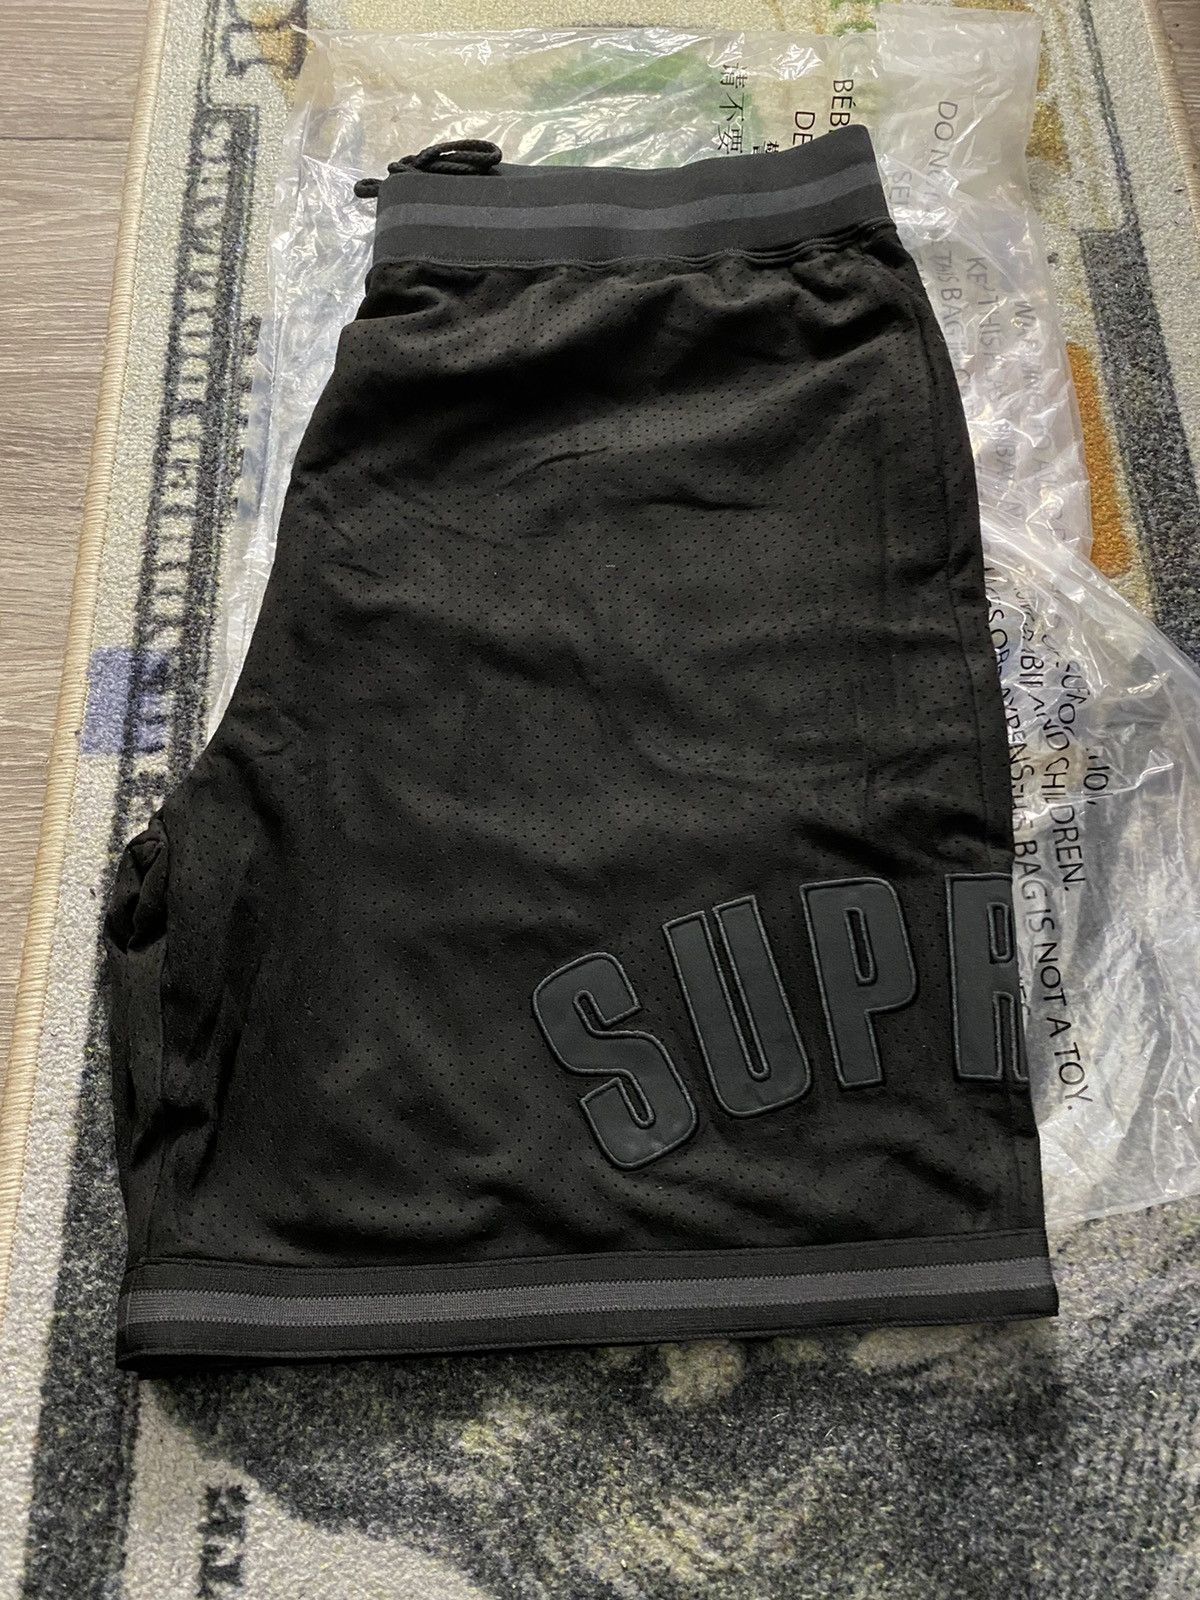 Supreme Supreme Ultra Suede Mesh Short (XL) | Grailed